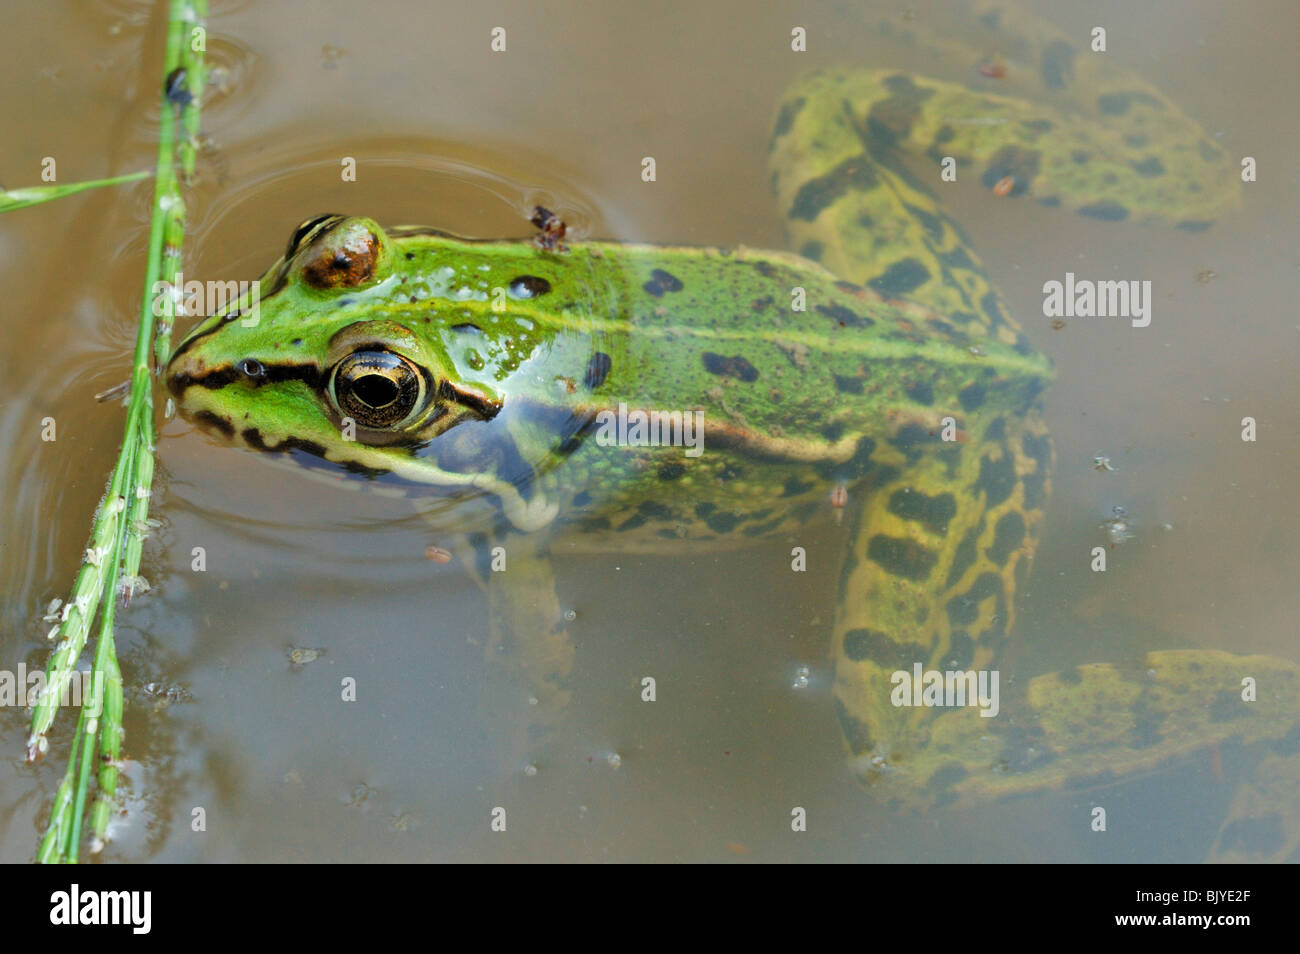 Edible frog (Pelophylax kl. esculentus / Rana kl. esculenta) floating in pond Stock Photo